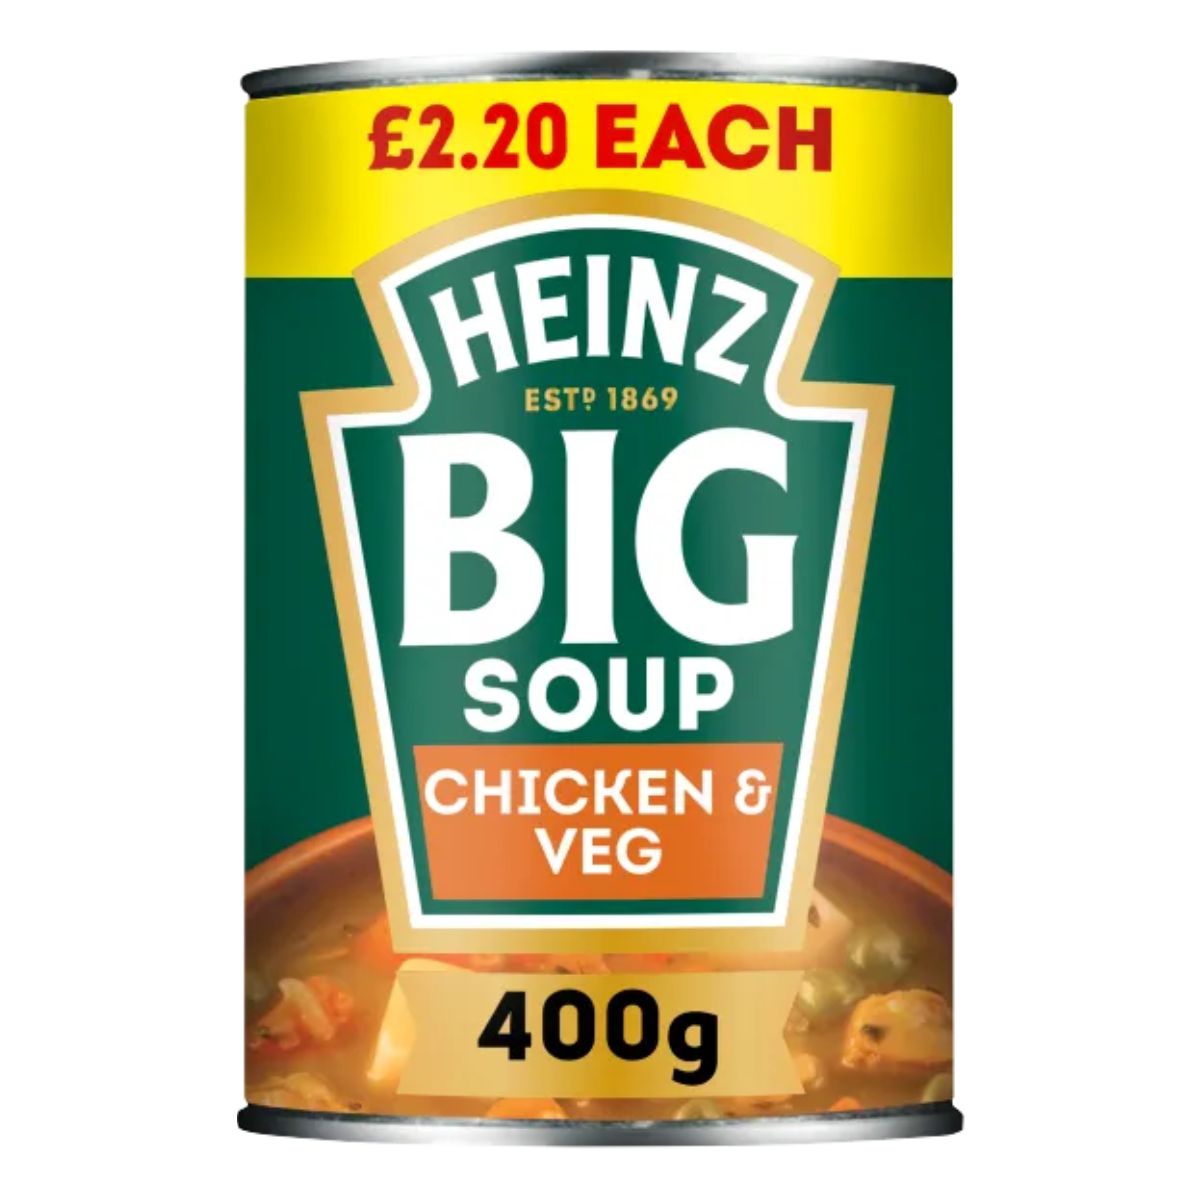 Heinz - Big Soup Chicken & Vegetable - 400g.